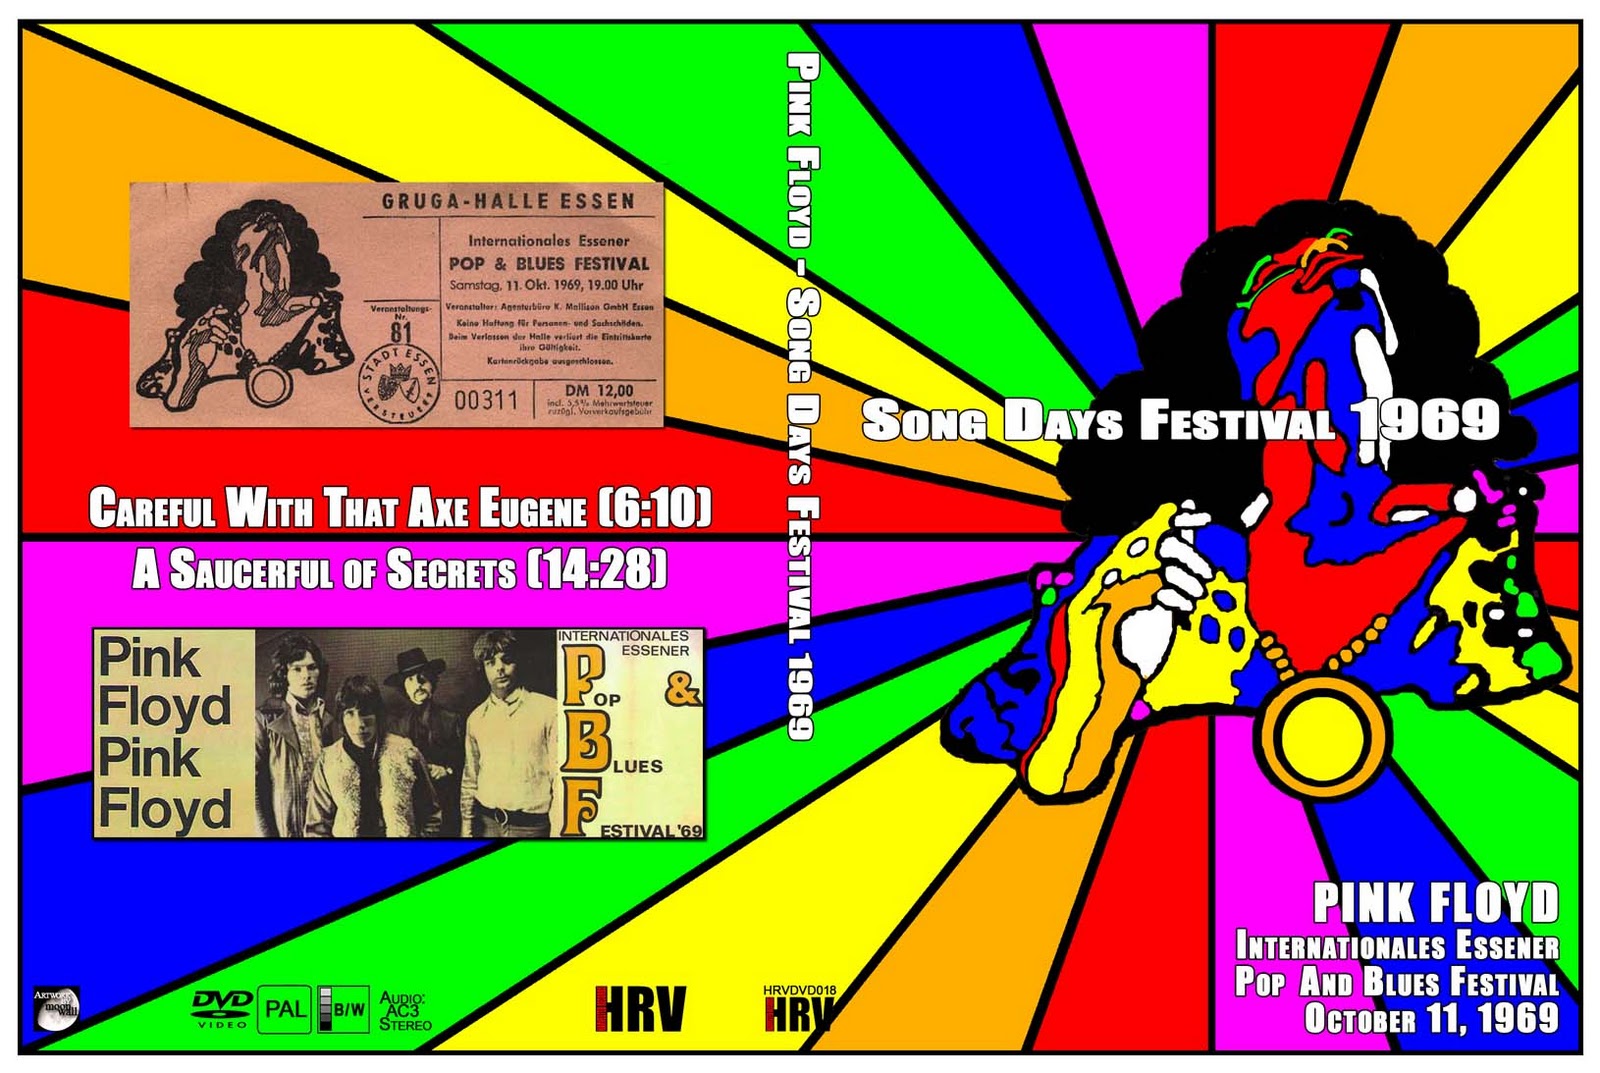 http://2.bp.blogspot.com/-AVY88P4AQDk/TZk8kZjjZVI/AAAAAAAACbM/bhgMjMW6iDA/s1600/DVD+Cover+-+Pink+Floyd+-+10-11-1969+-+Pop+And+Blues+Festival.jpg